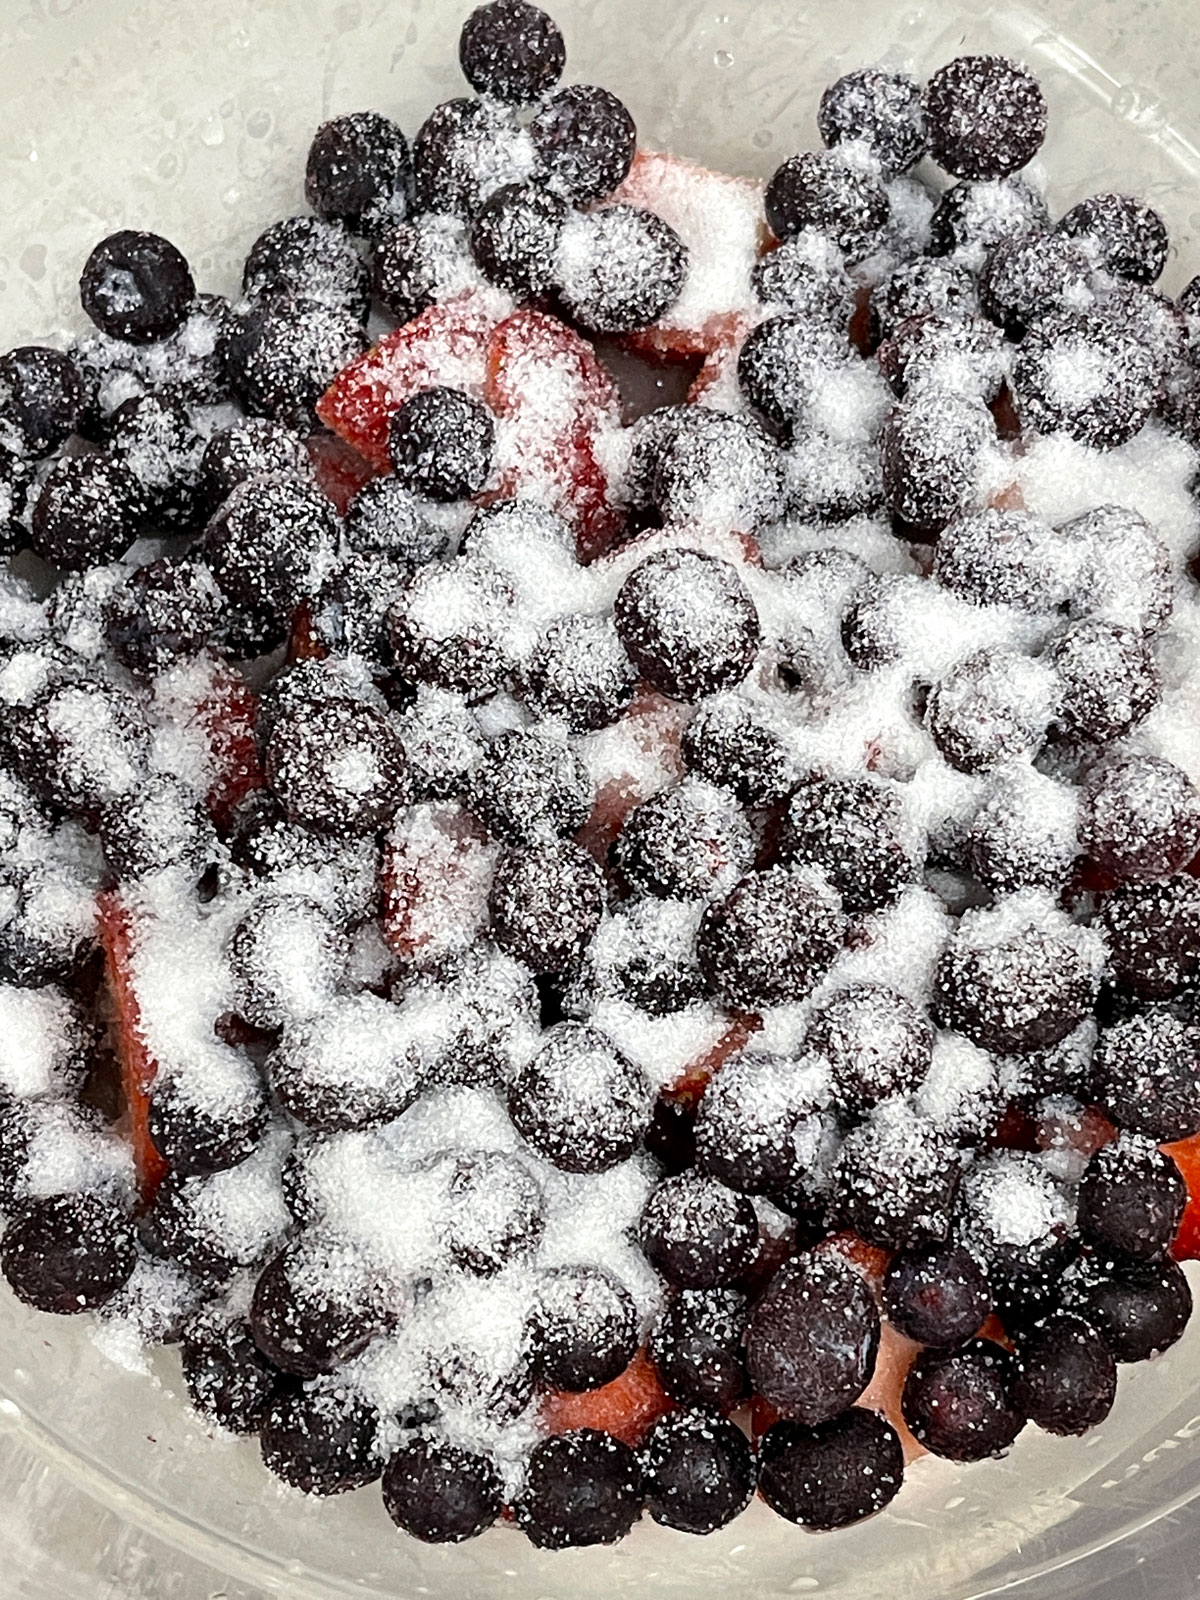 add sugar to berries